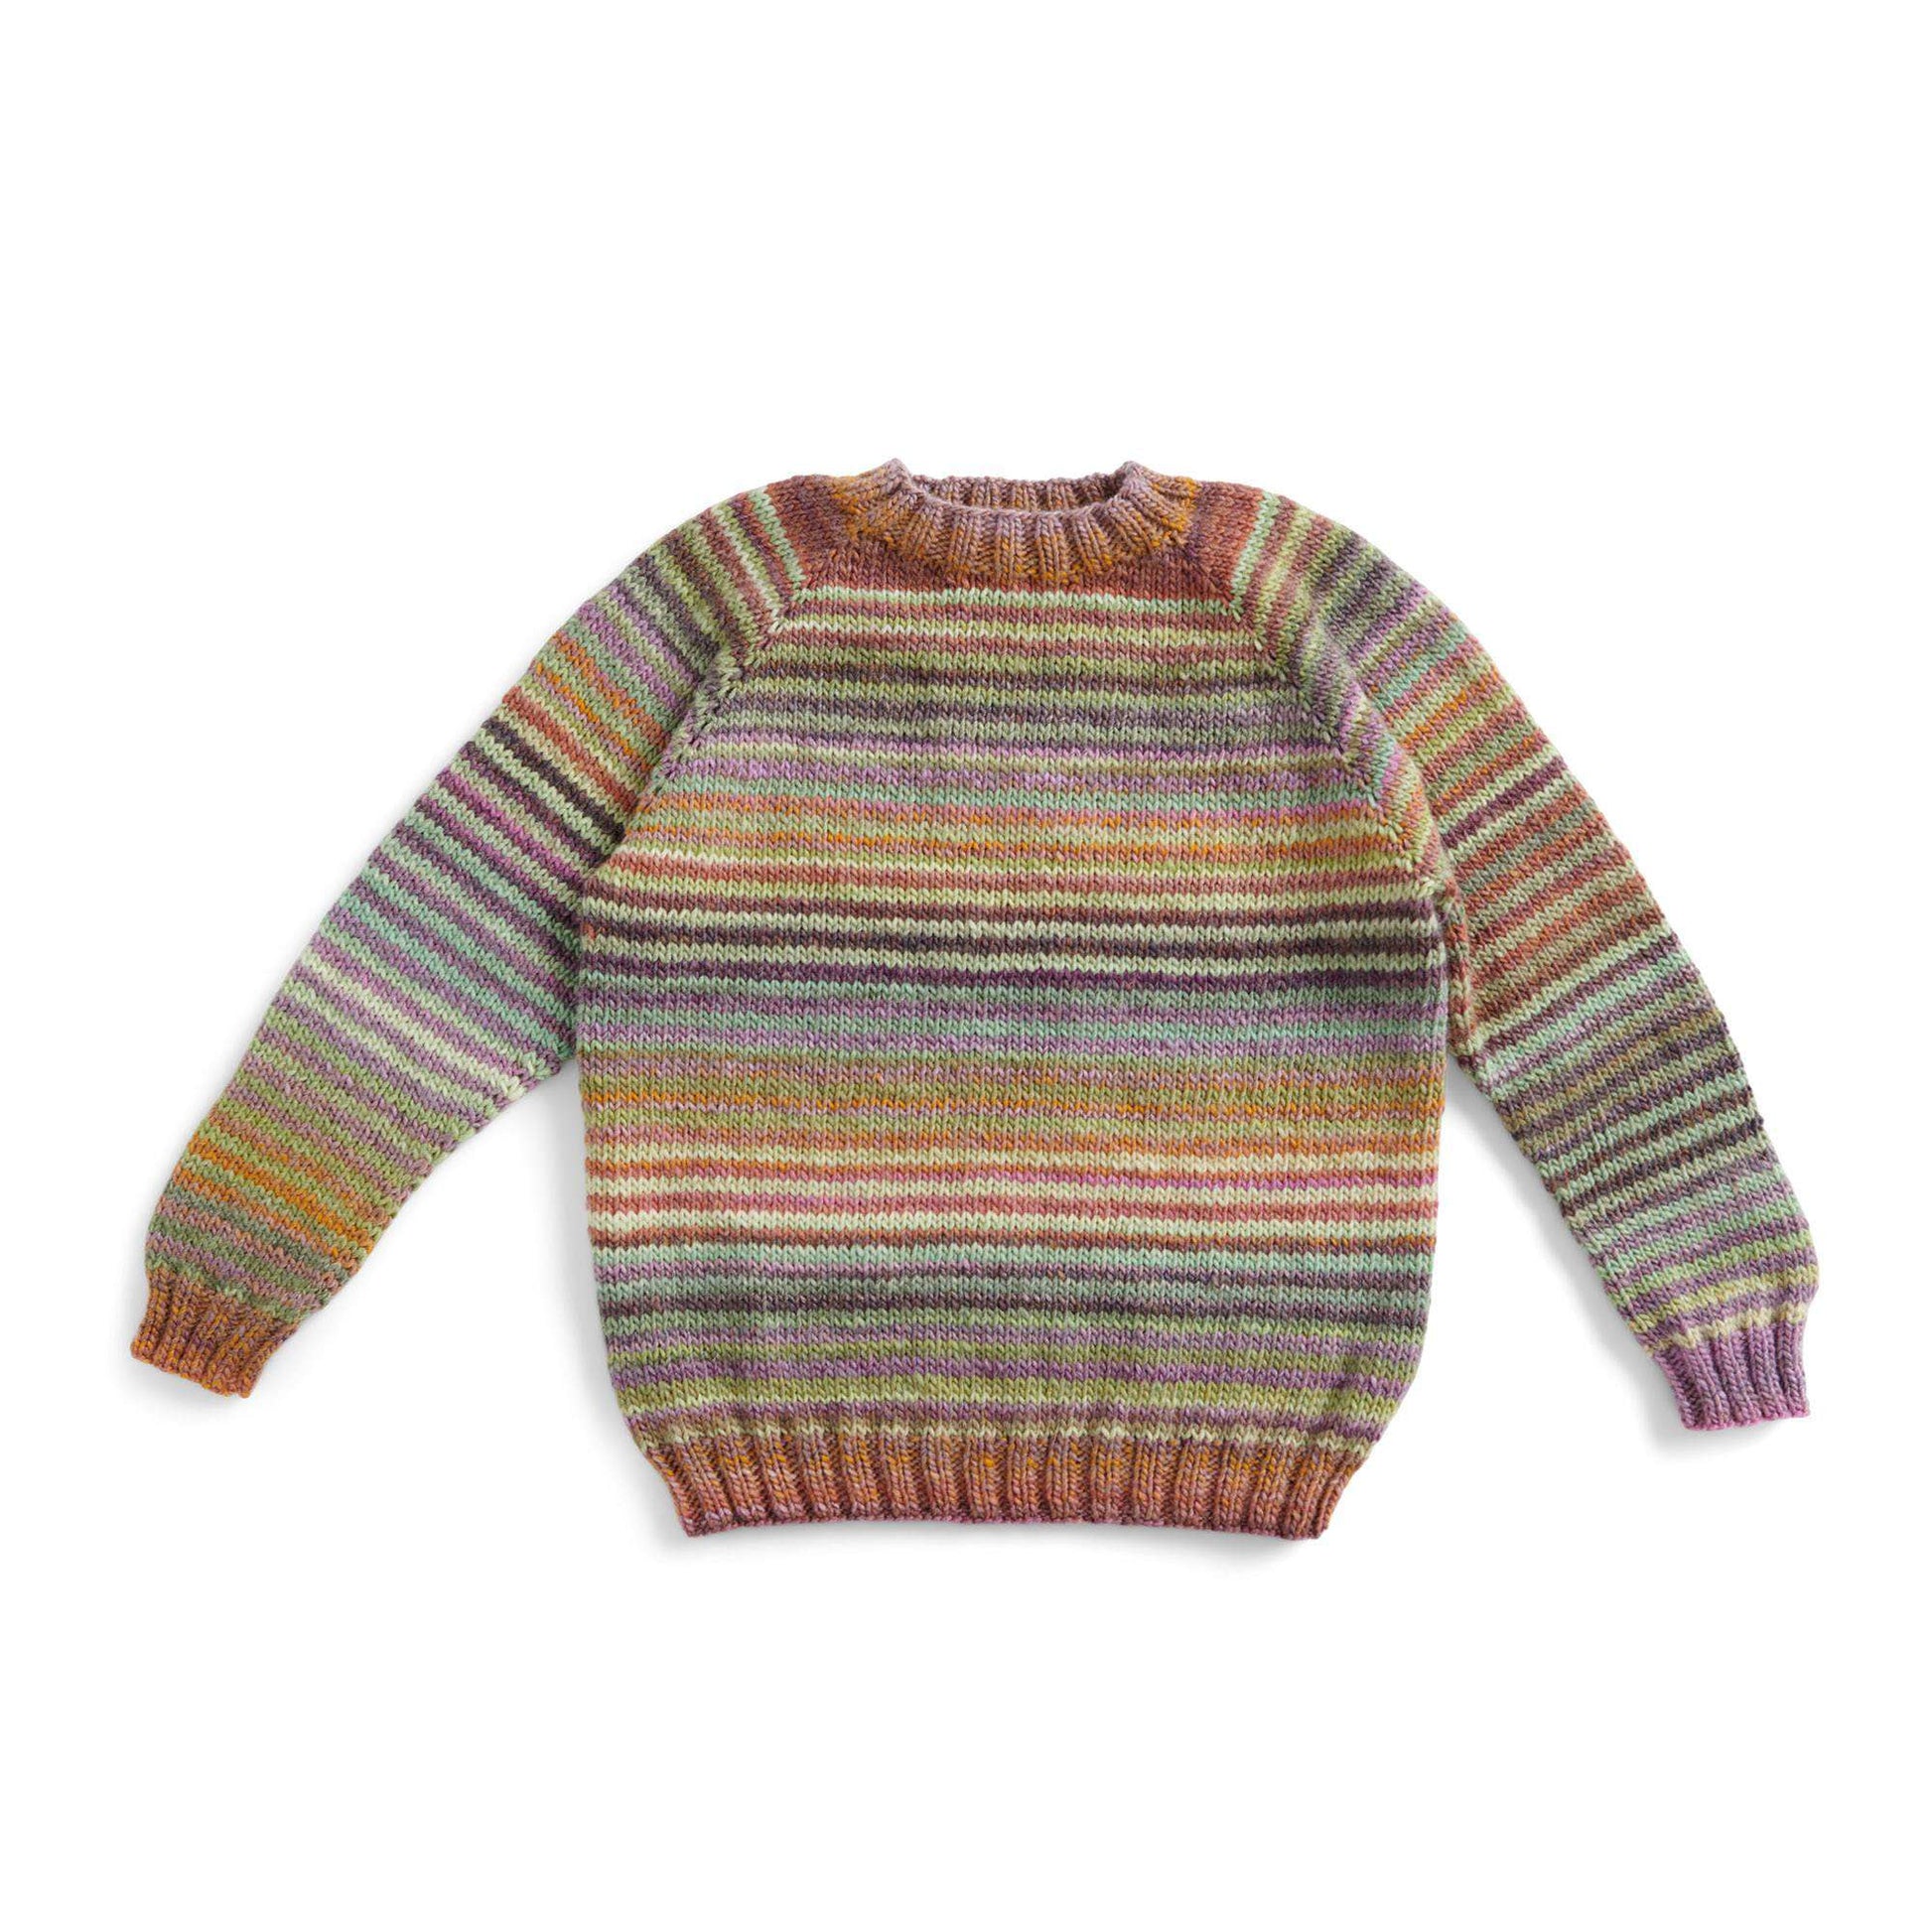 Caron Knit Striped Top Down Sweater Pattern | Yarnspirations